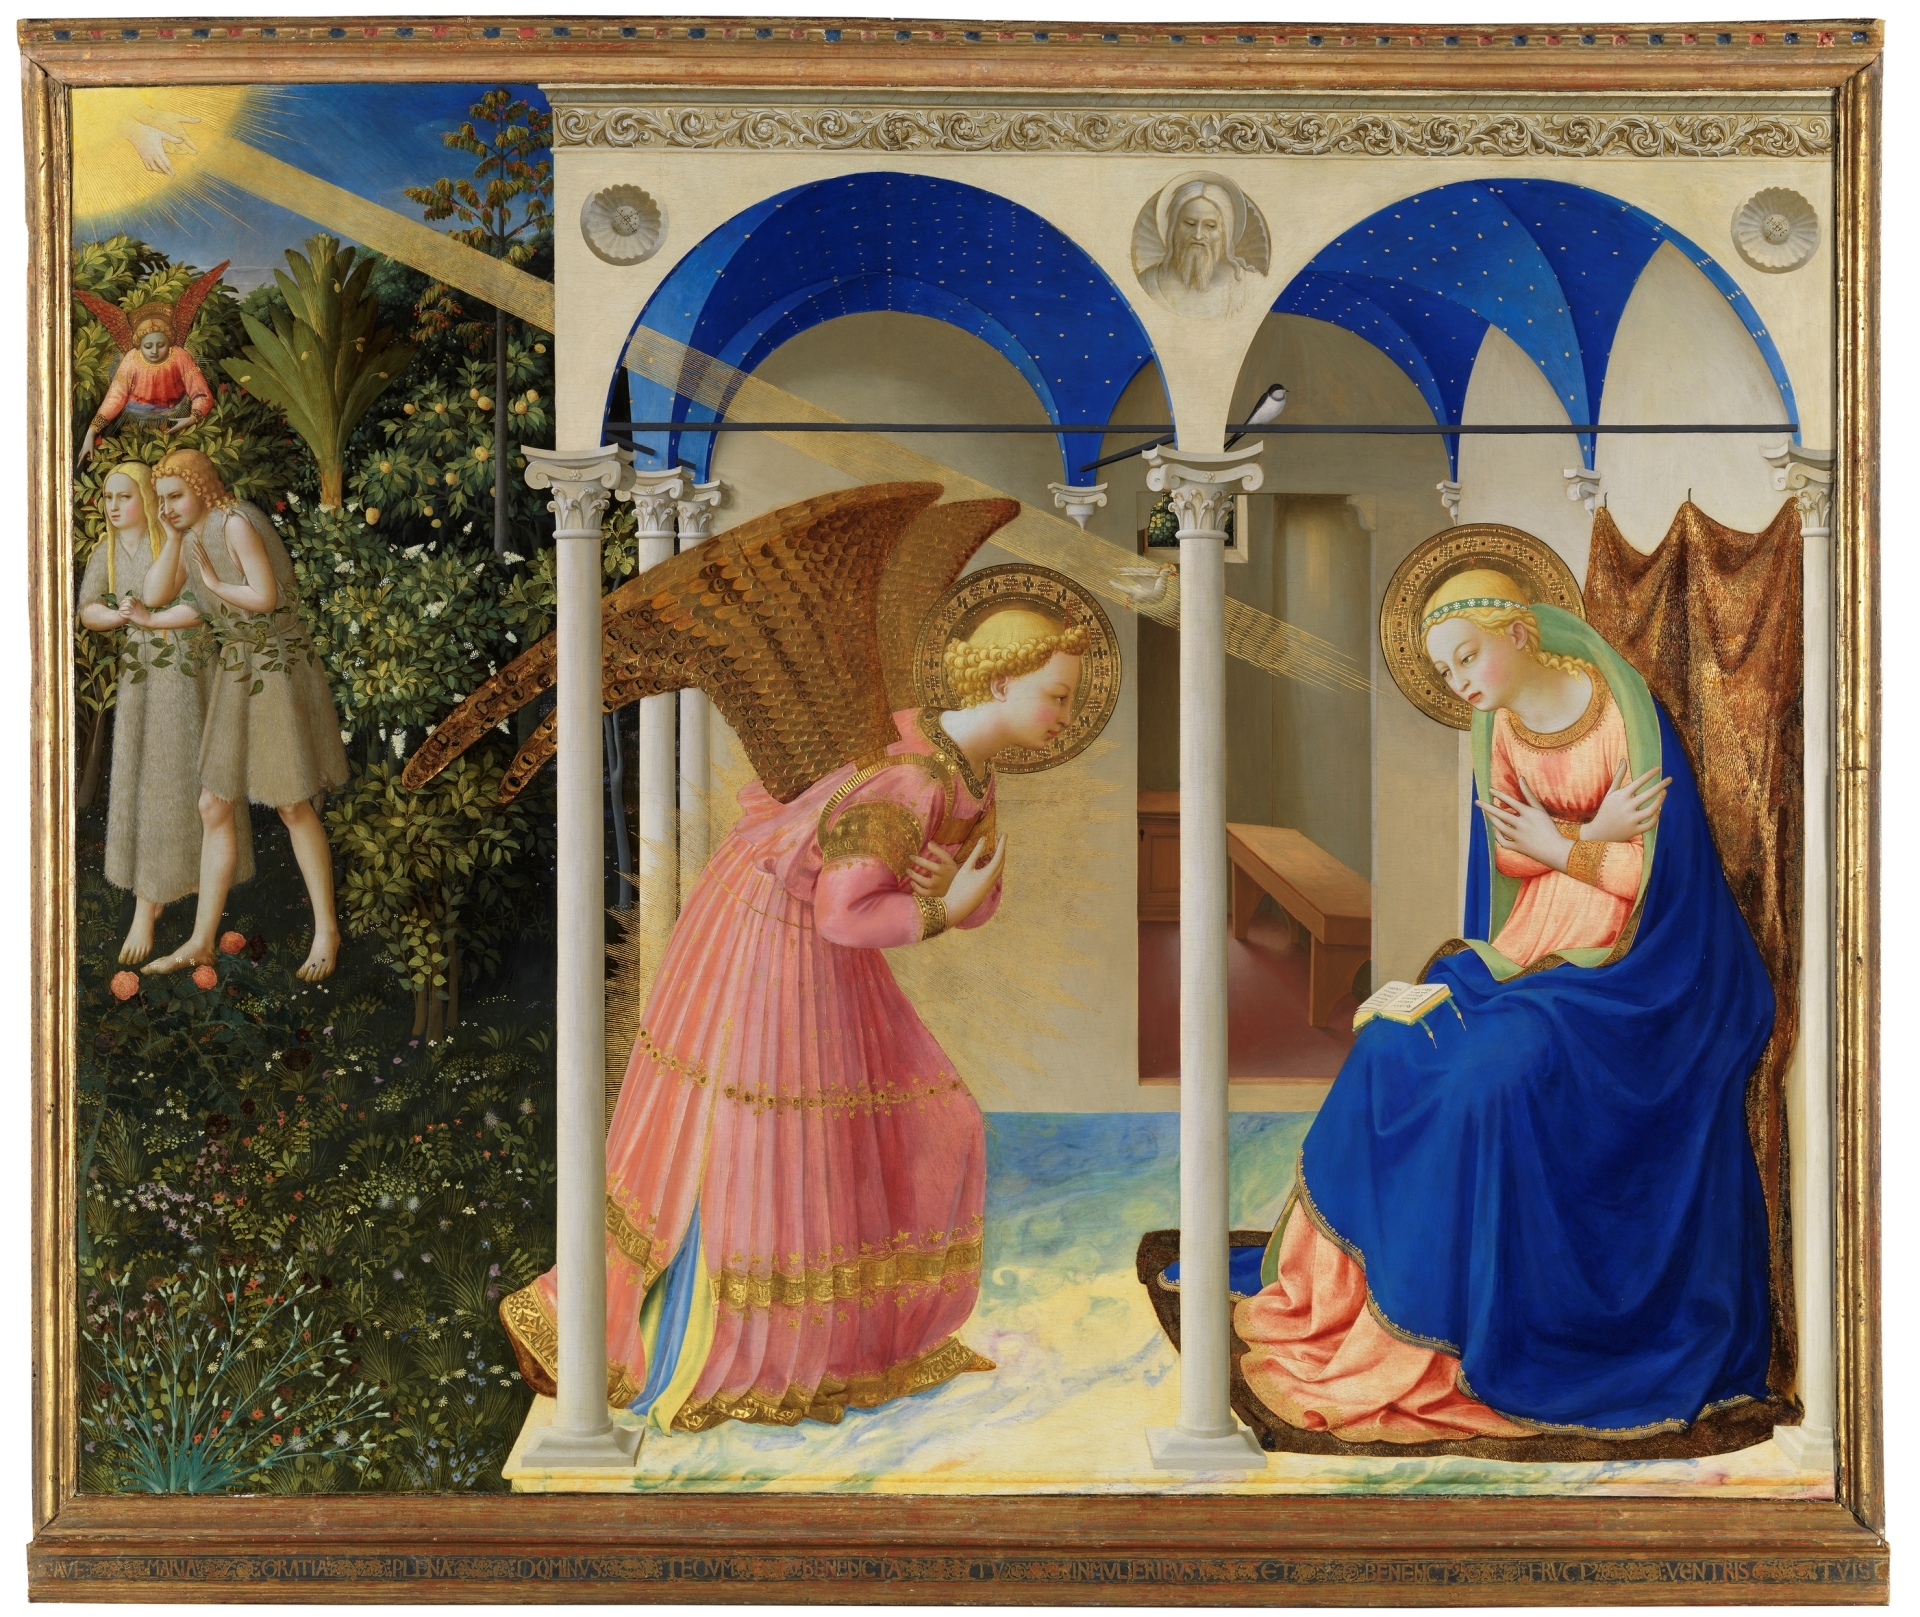 Buna Vestire by Fra Angelico - c. 1426 - 162.3 x 191.5 cm 